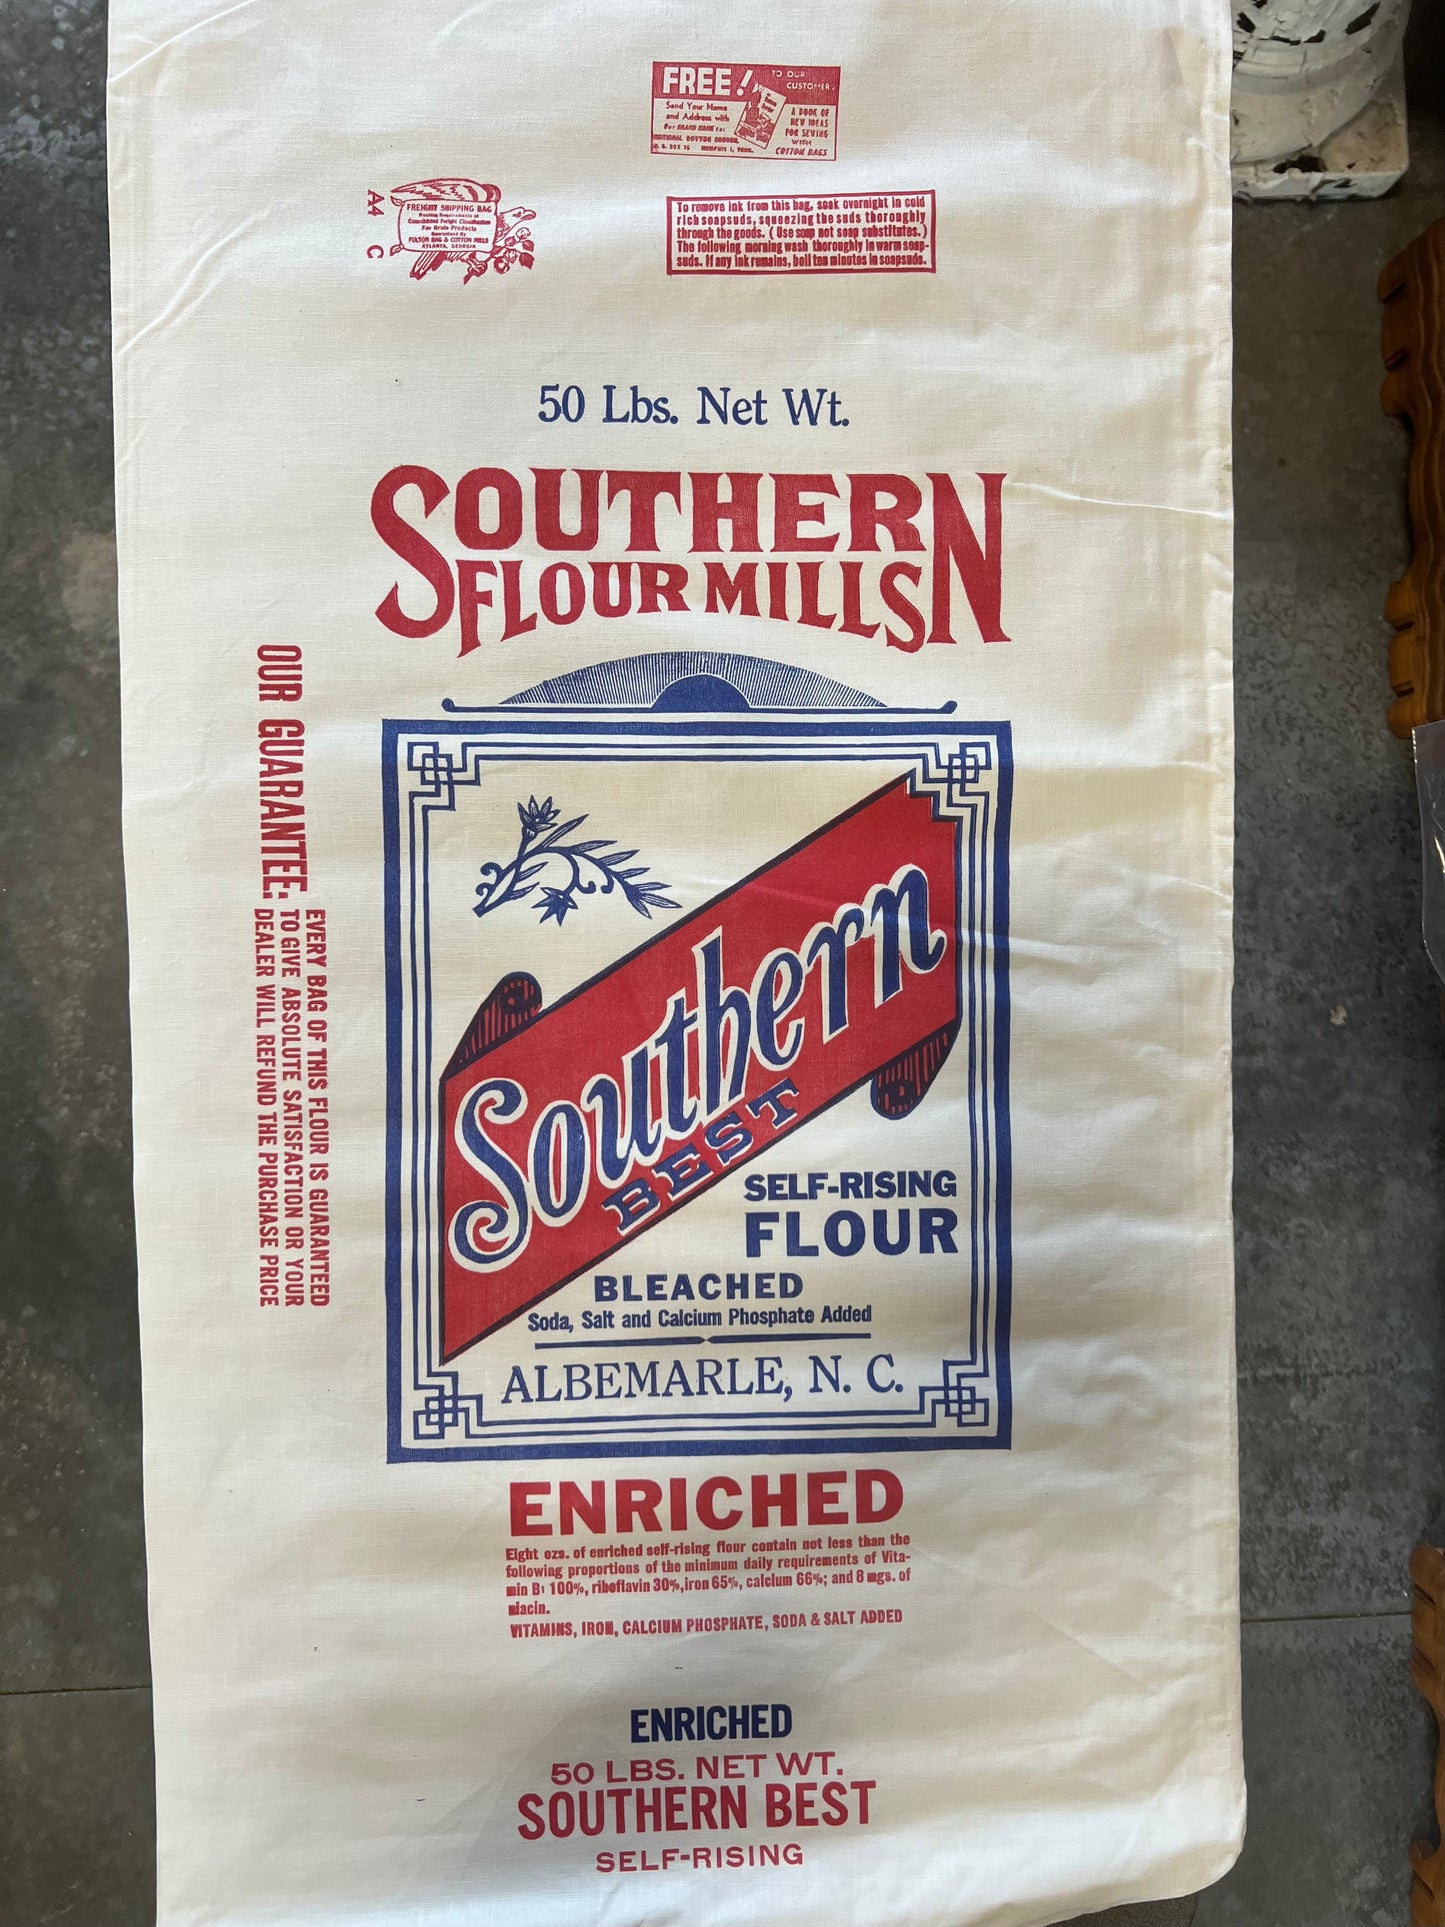 Southern Flour fabric sack